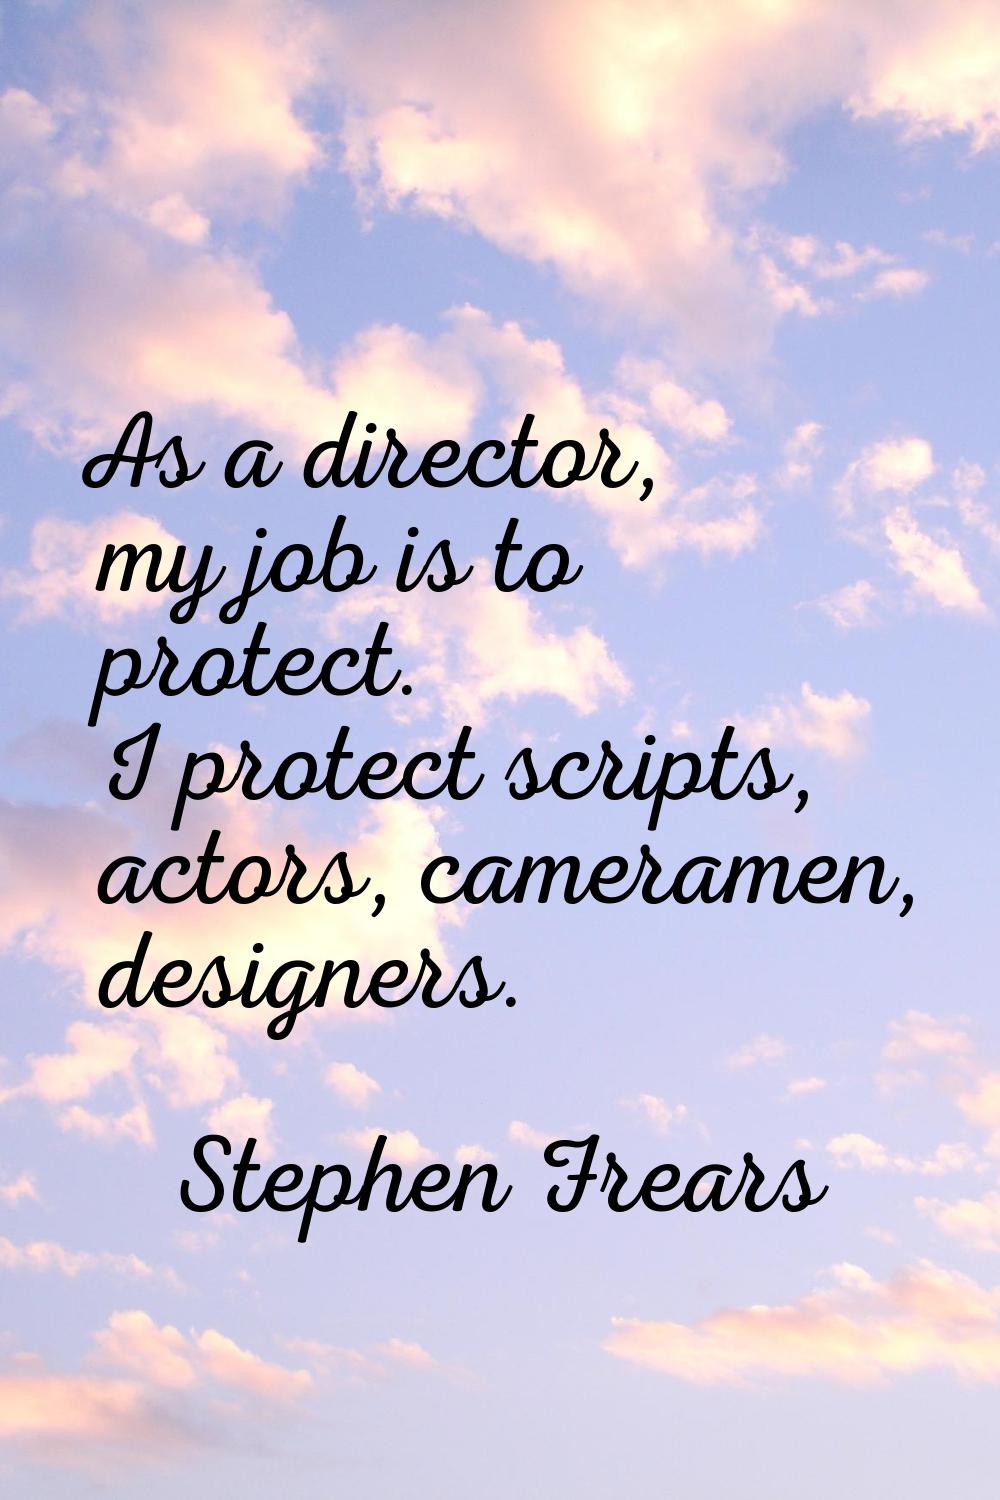 As a director, my job is to protect. I protect scripts, actors, cameramen, designers.